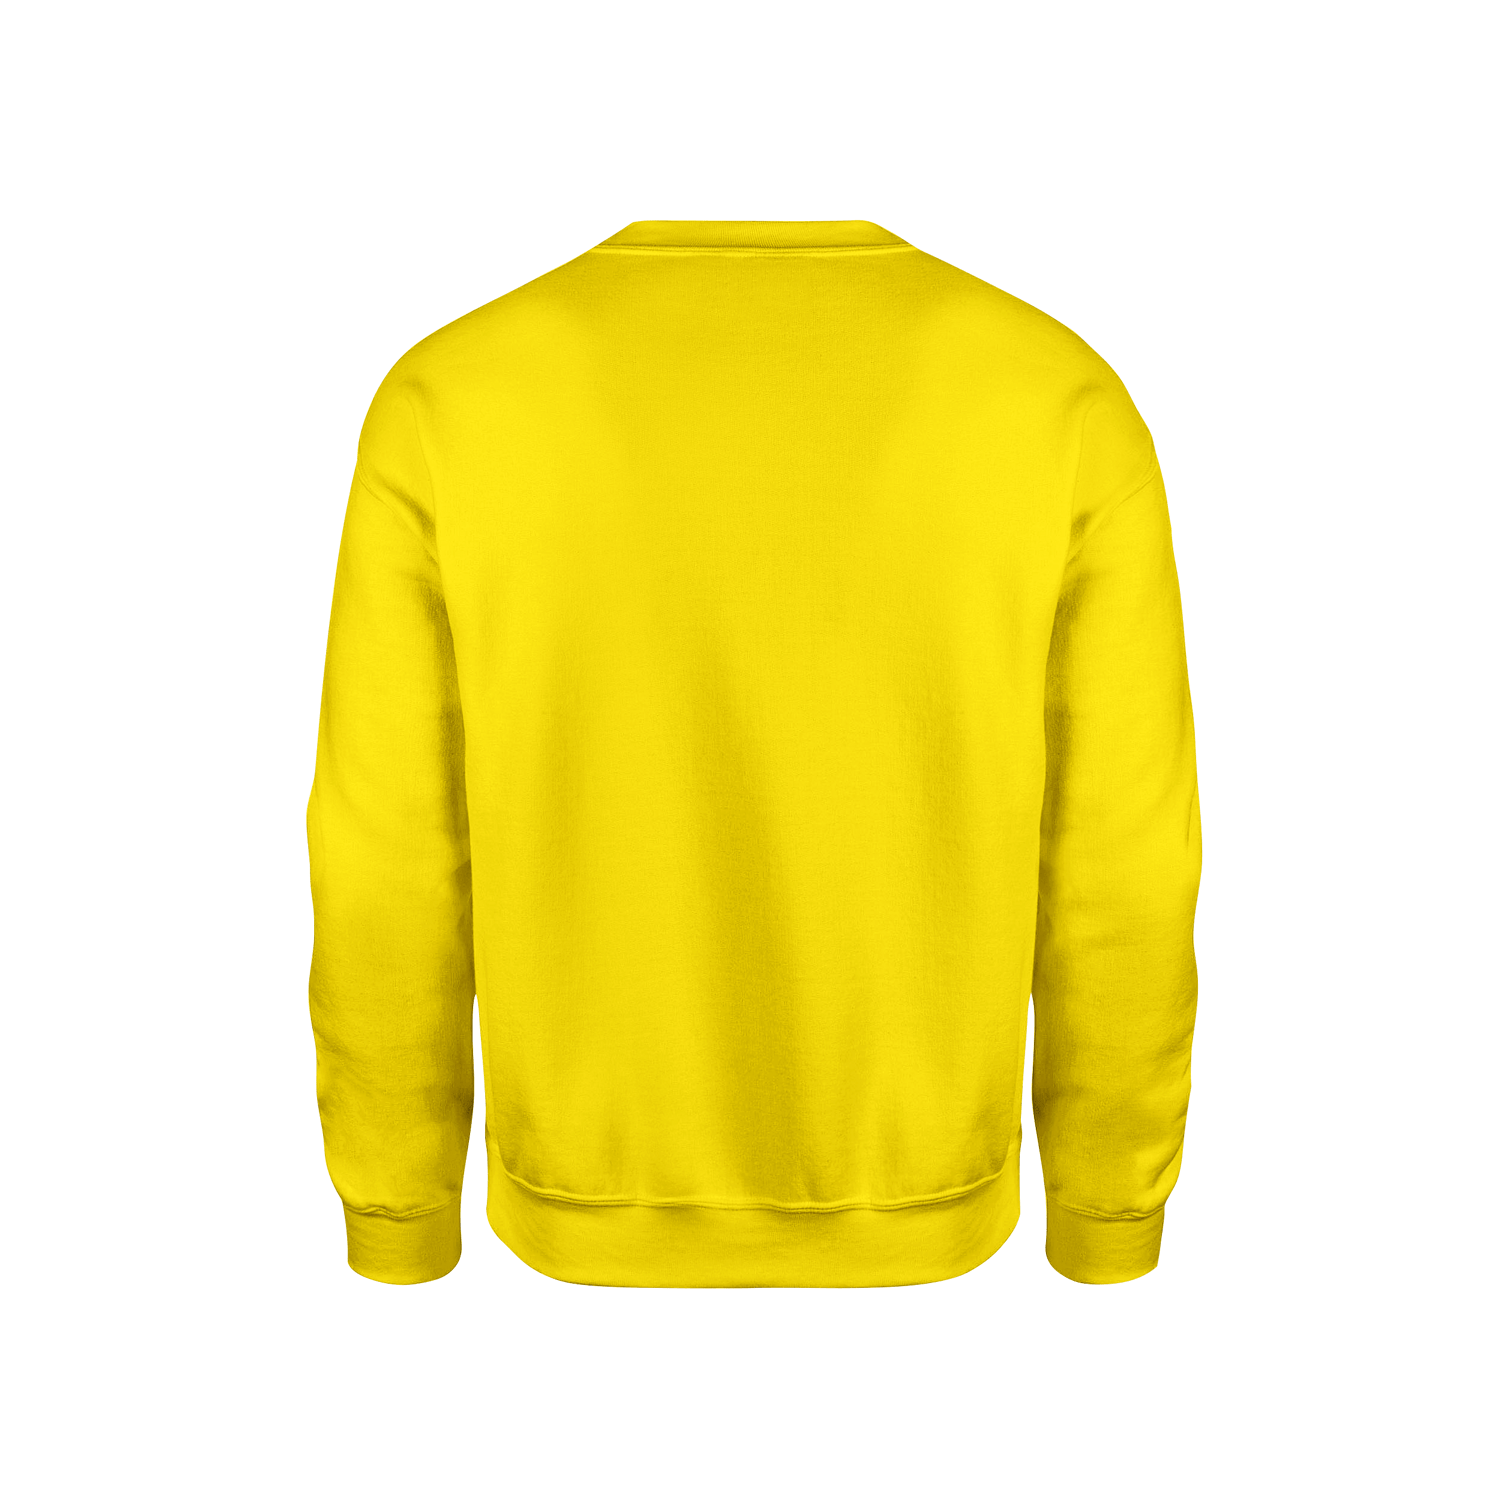 Bazarville Tshirt S / Sun Yellow Sweatshirt - Yellow